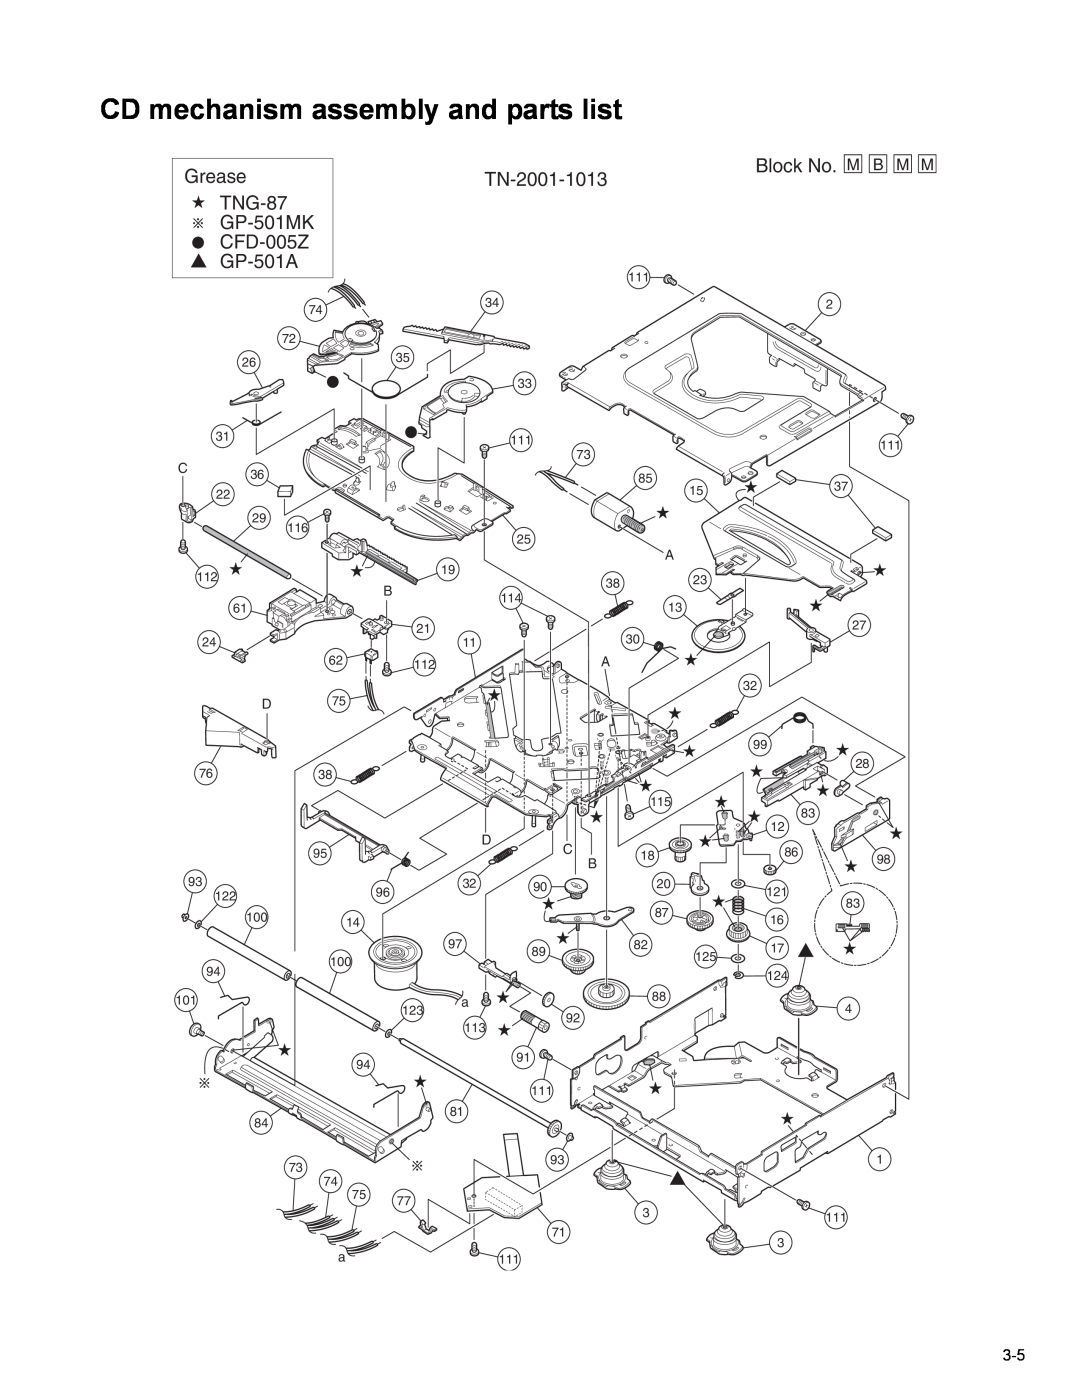 JVC KD-LH401 service manual CD mechanism assembly and parts list, TN-2001-1013, Block No. M B M M 